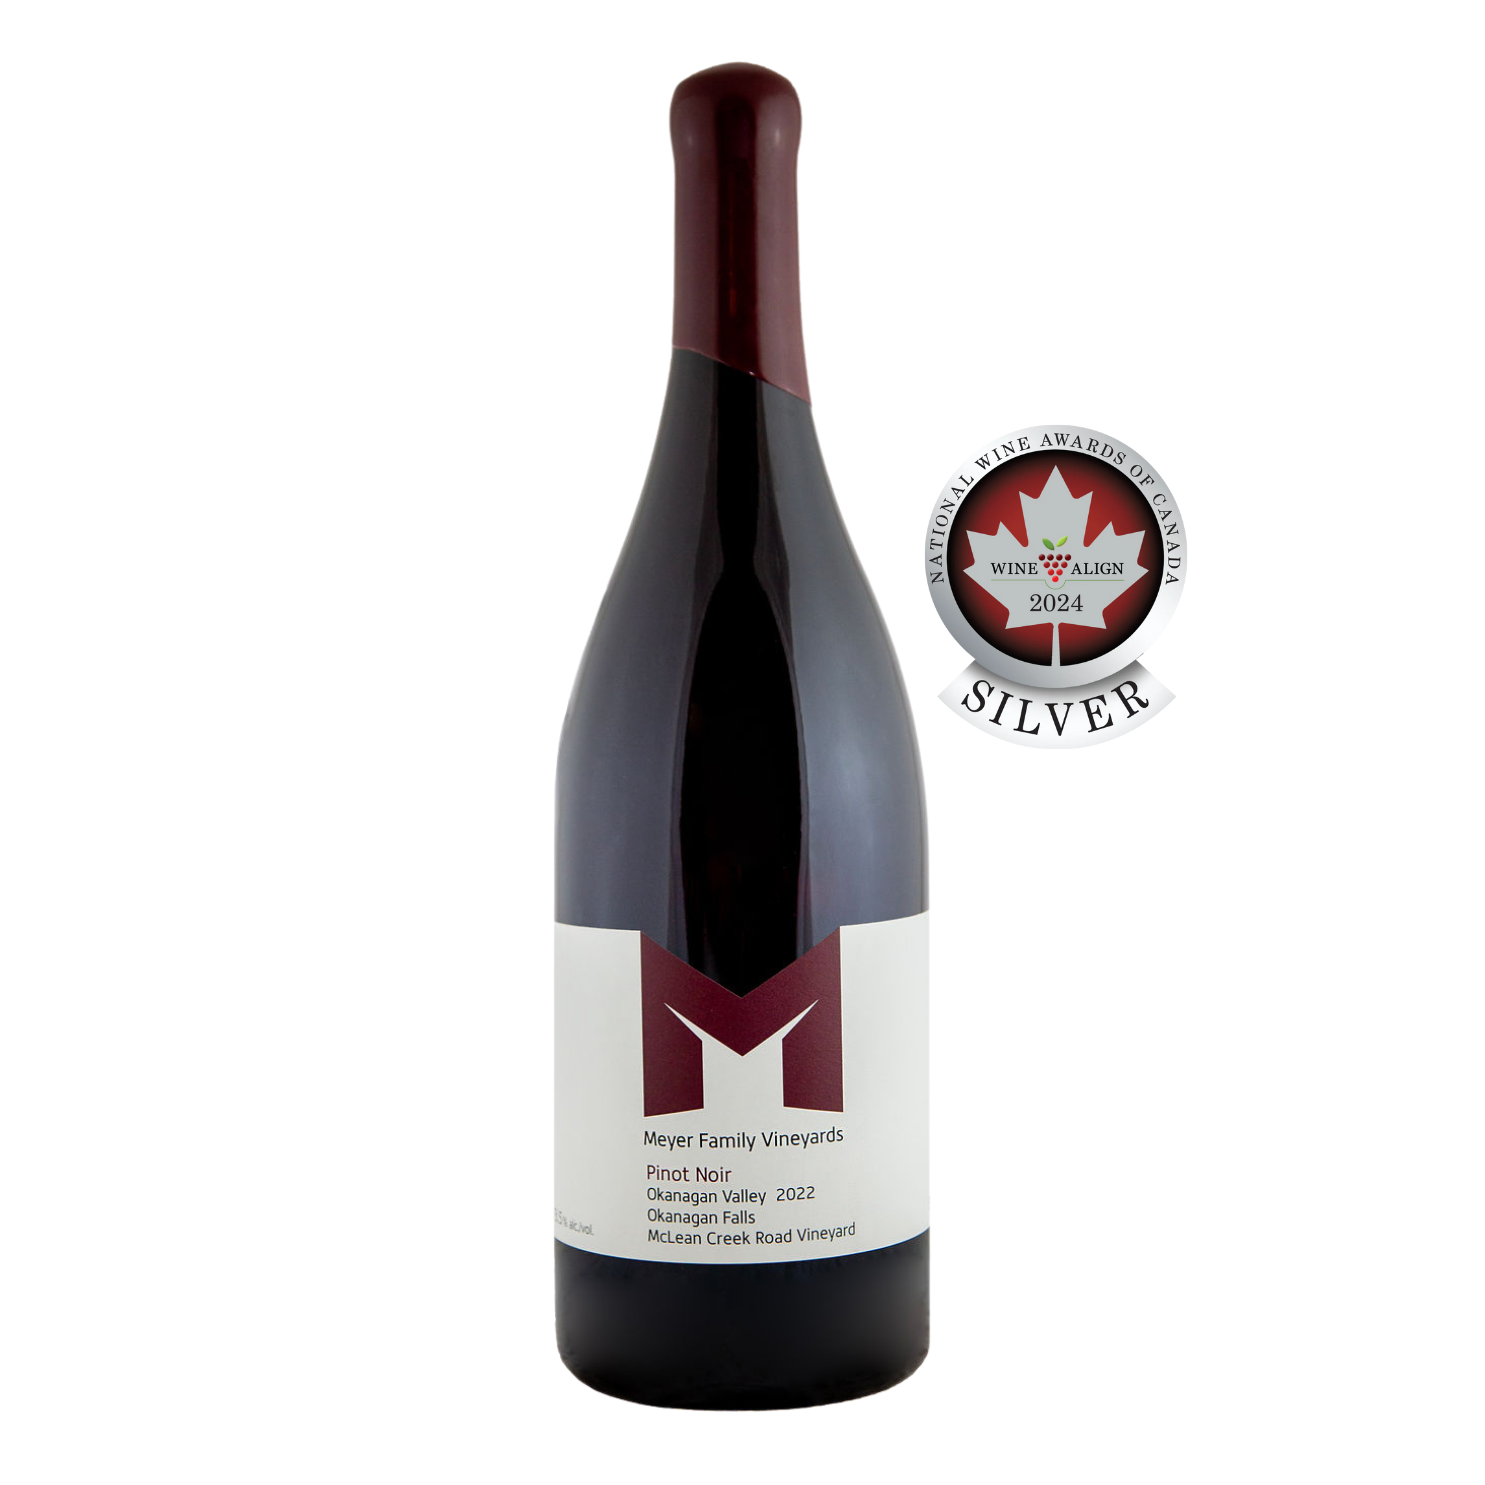 McLean Creek Rd Pinot Noir 2022 - 3L